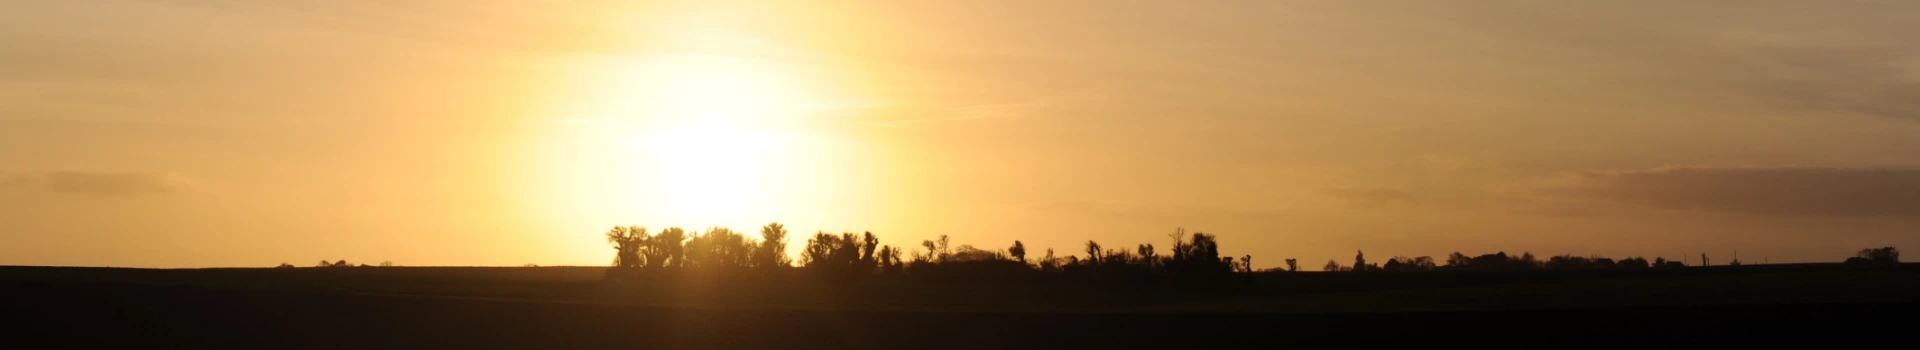 banner - wschód słońca nad horyzontem